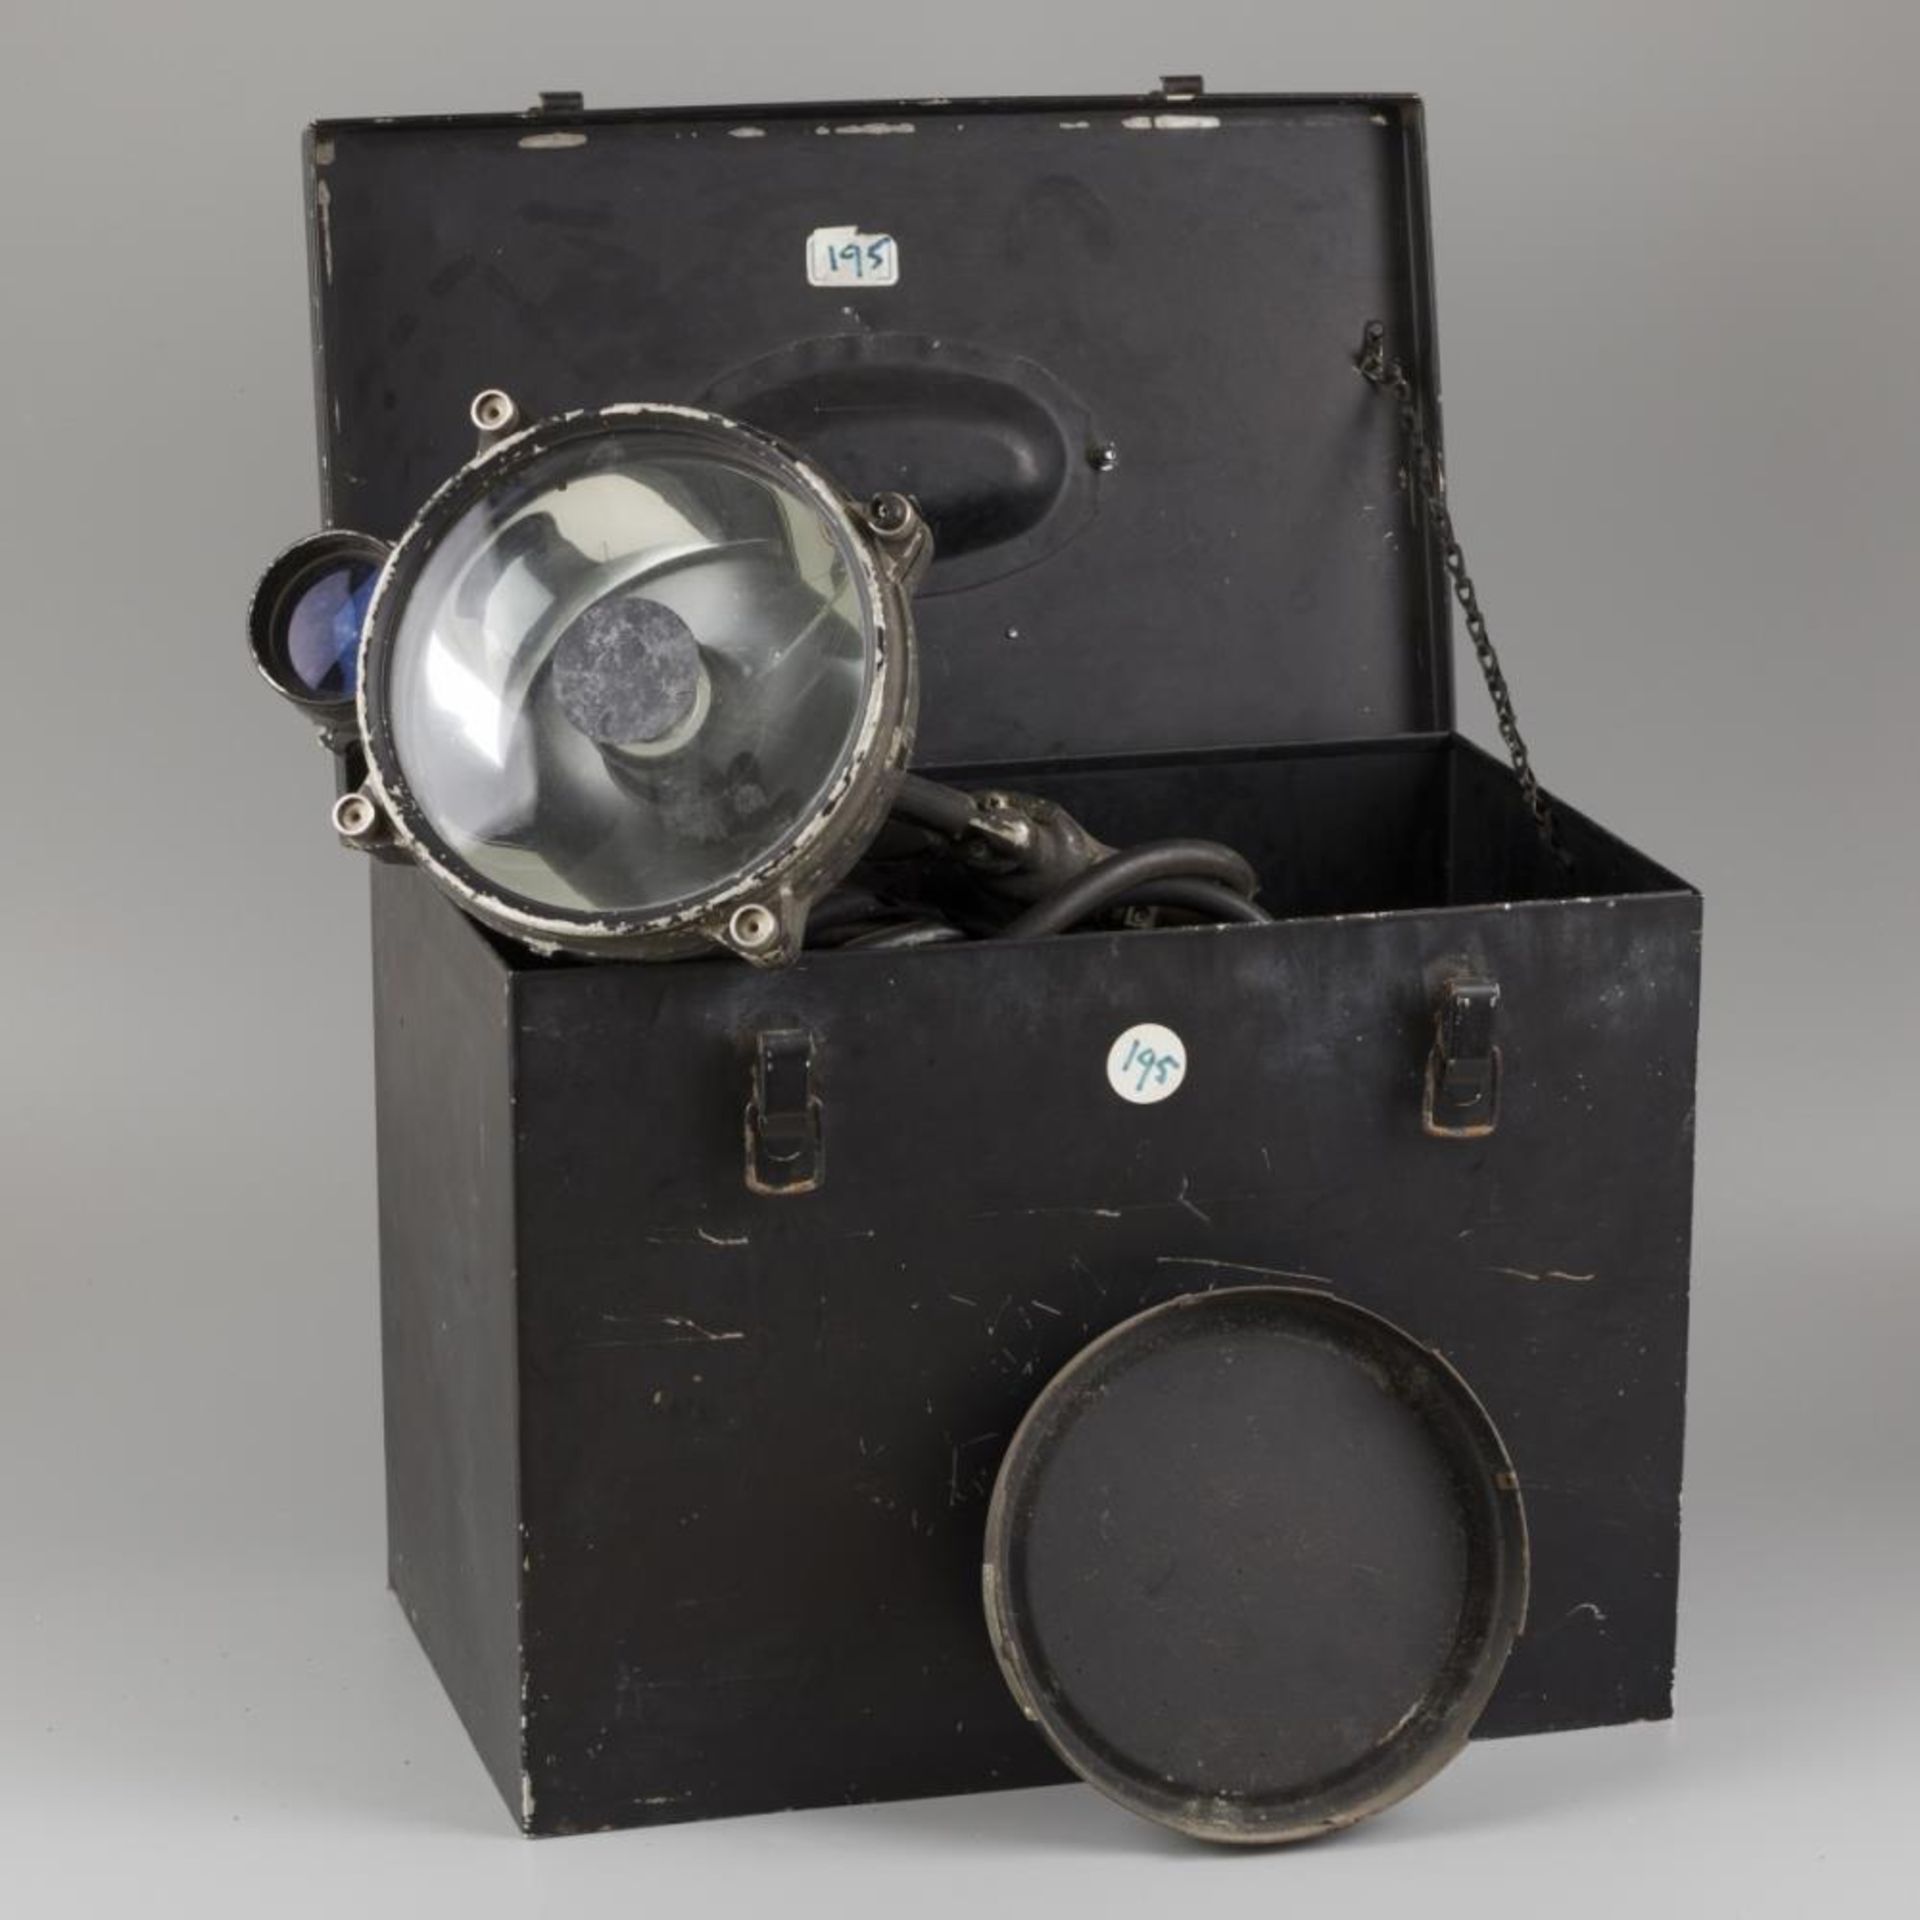 A Morse Code Aldis signal lamp, light canon, Japan(?), mid. 20th century.